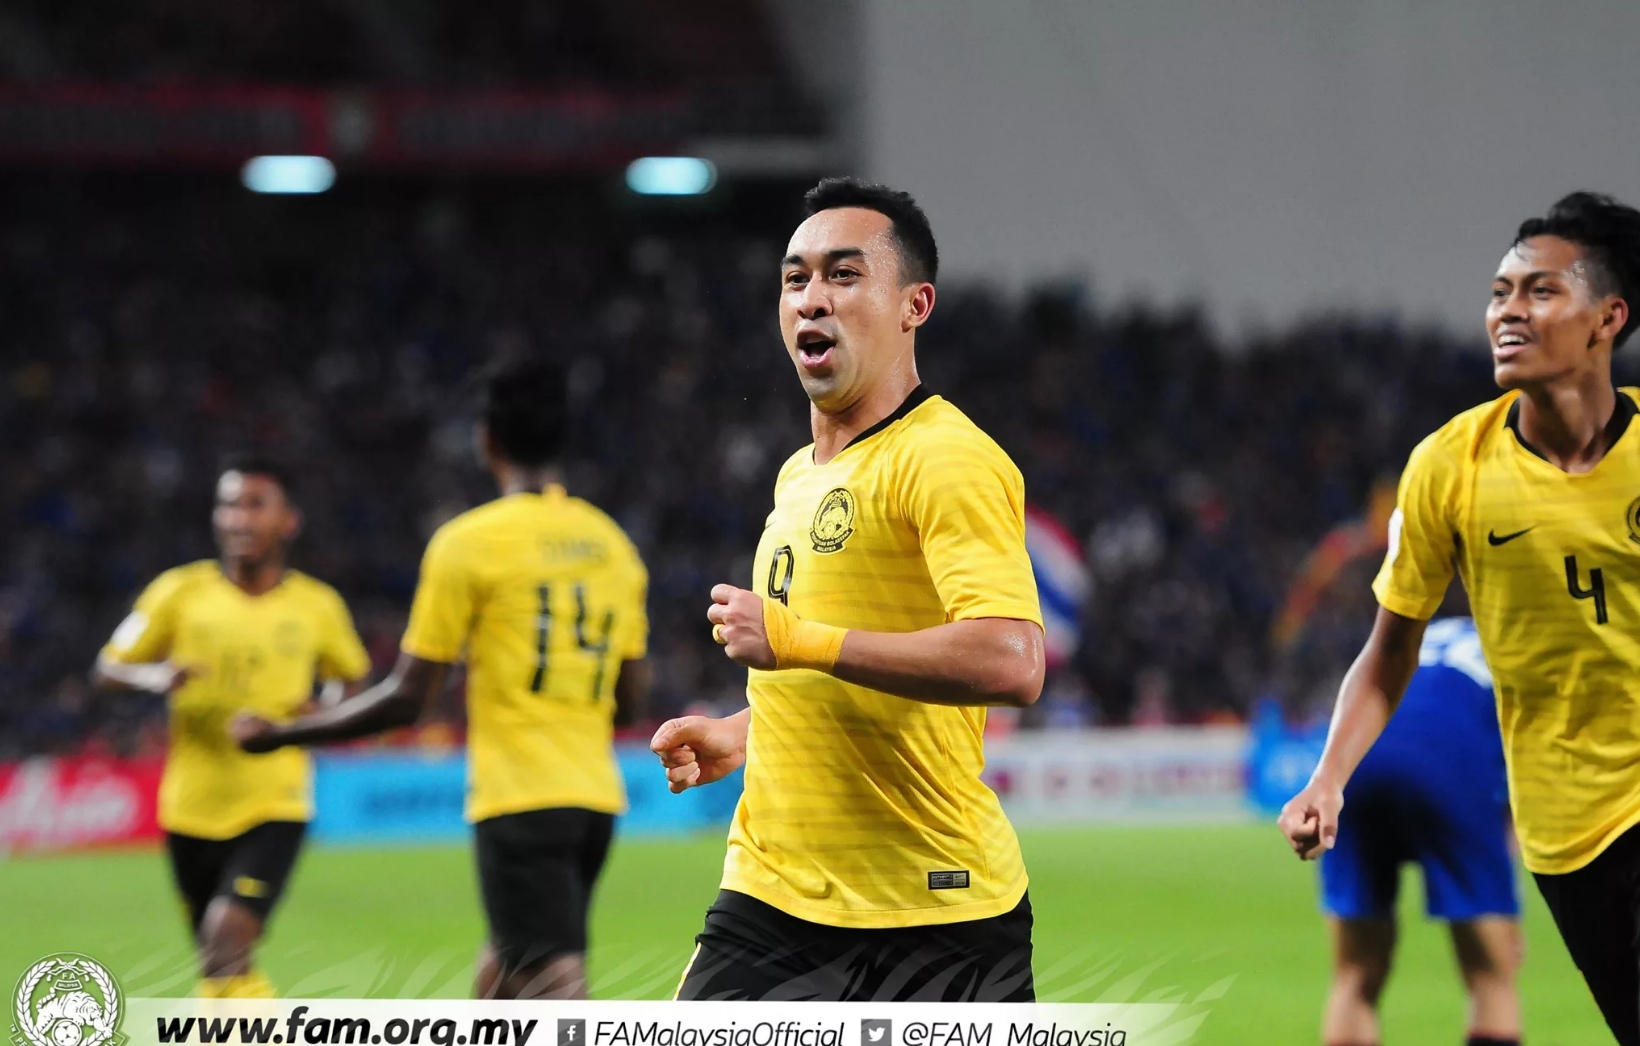 Kini Mat Yo Sebaris Safee Sali & Indra Putra Penjaring Gol Terbanyak Sepanjang Piala AFF Suzuki